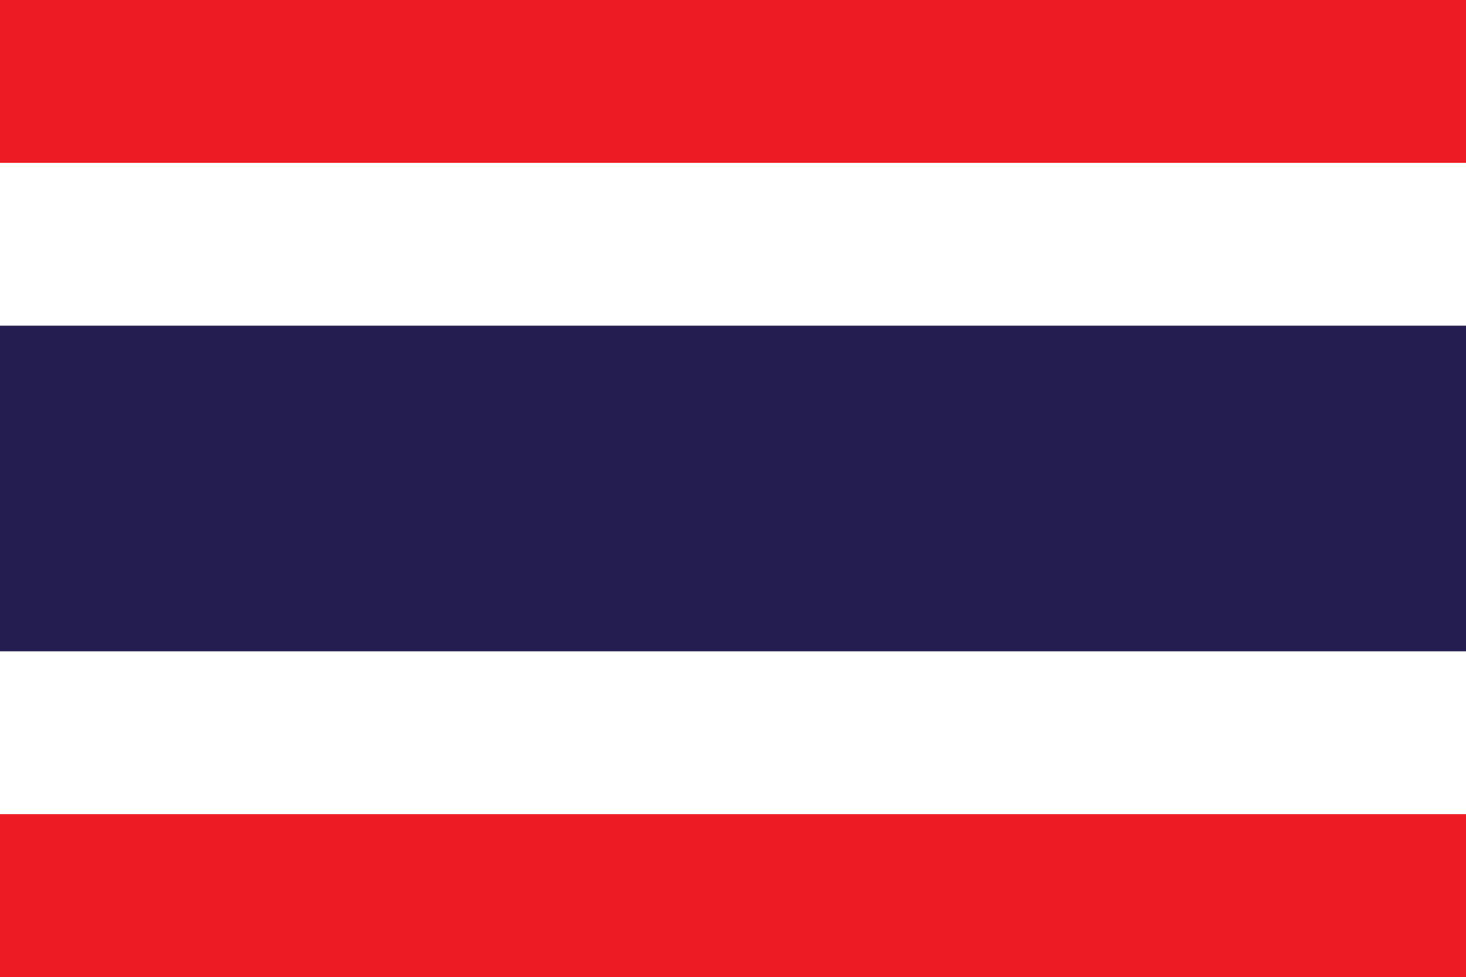 Imagem, bandeira do estado do estado da Tailândia - na resolucao de 1466x977 - Leste da Ásia